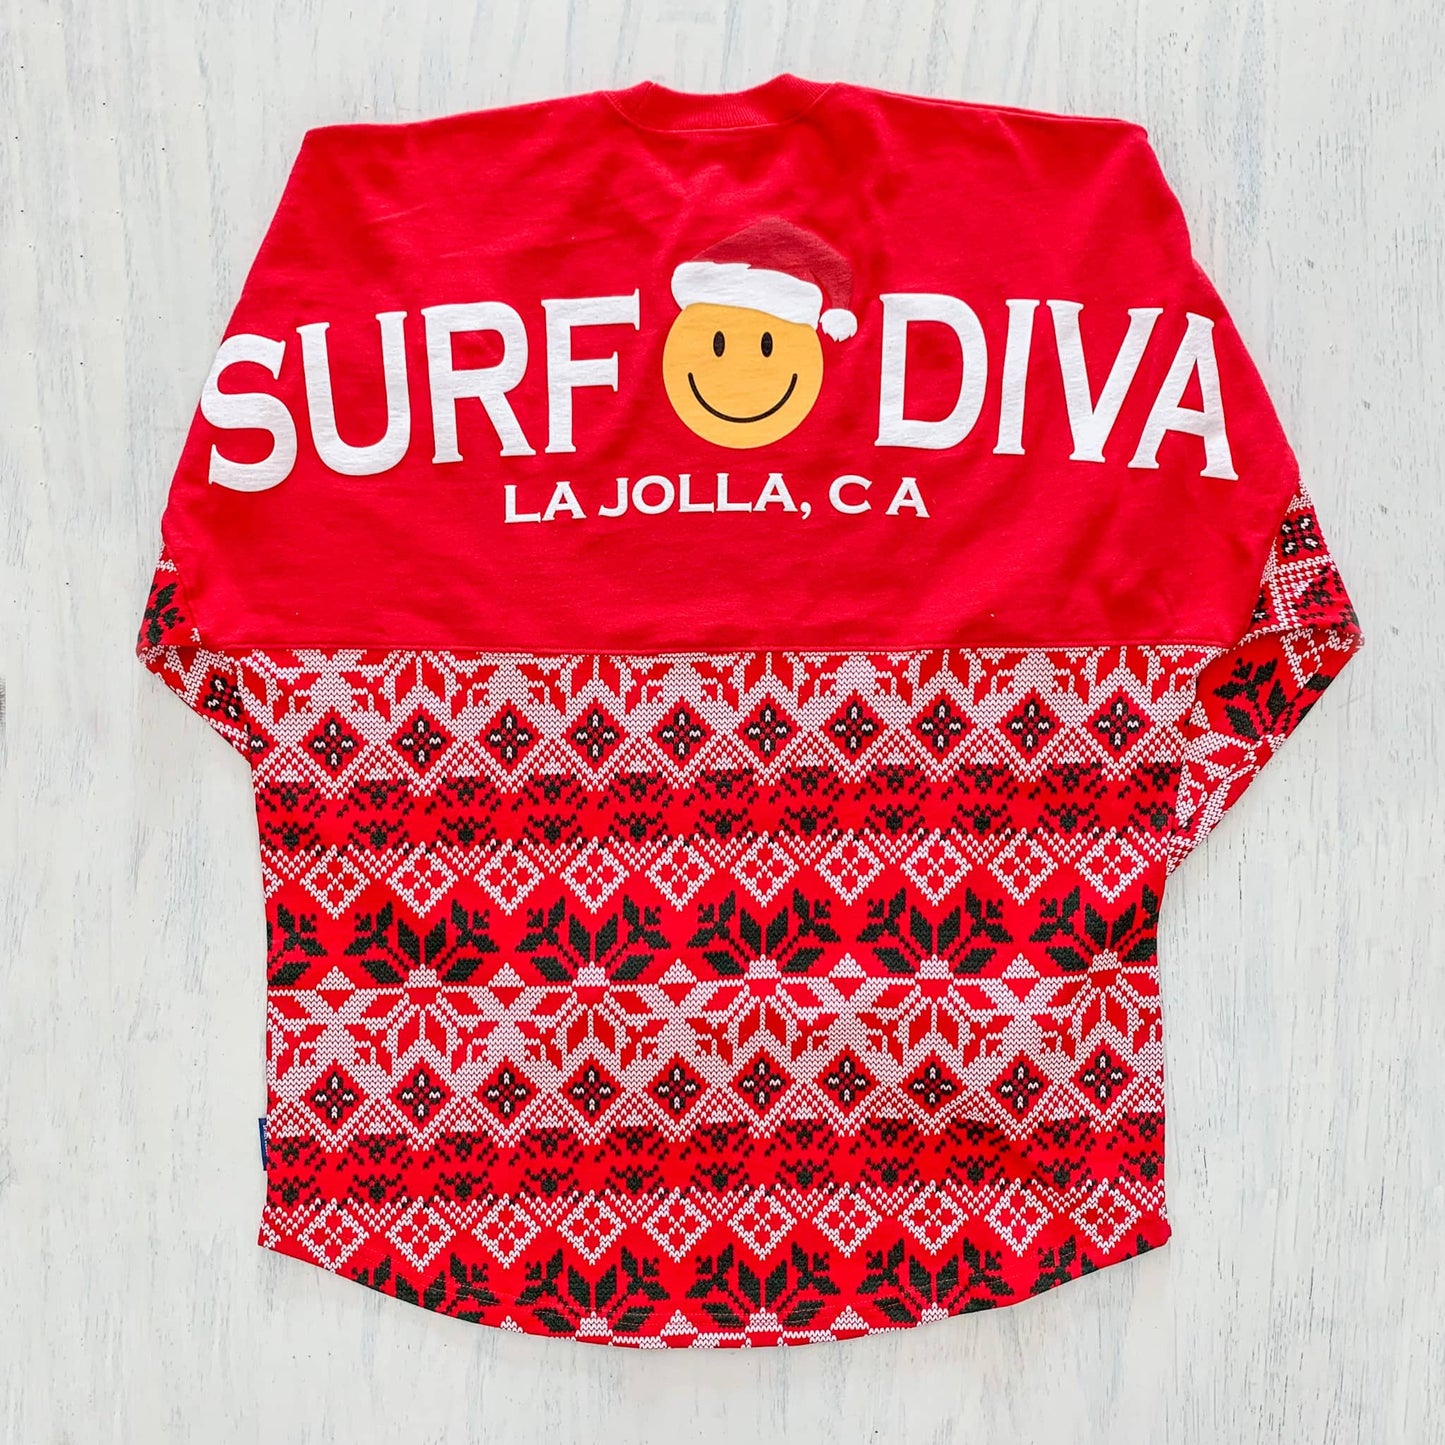 Surf Diva Surf Shop - X-MAS CREWNECK